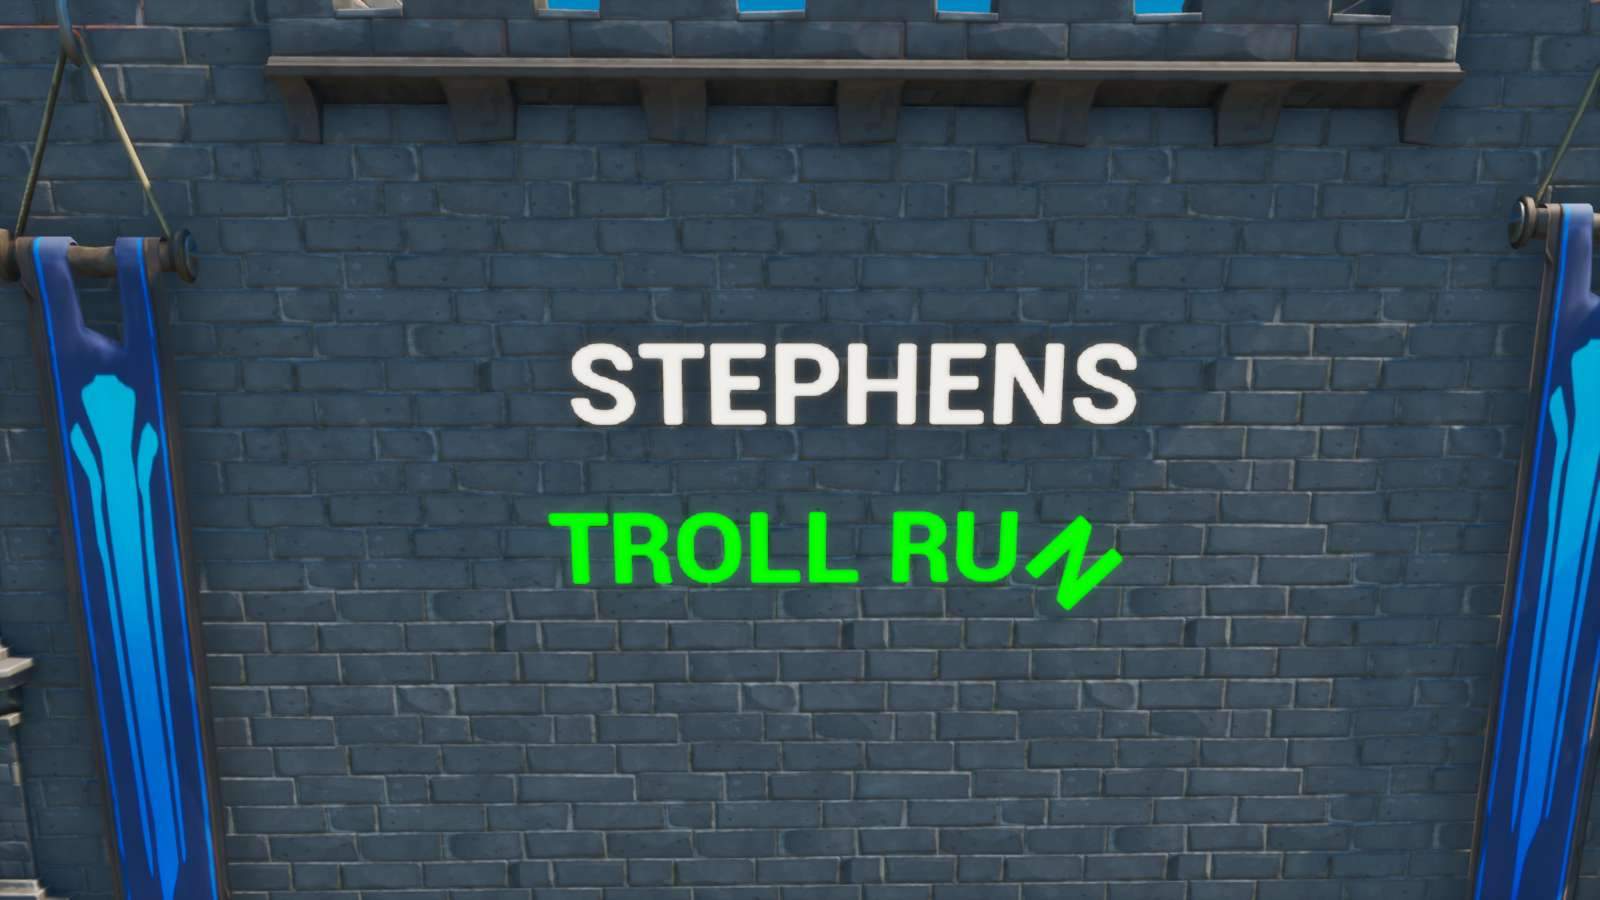 STEPHENS TROLL RUN